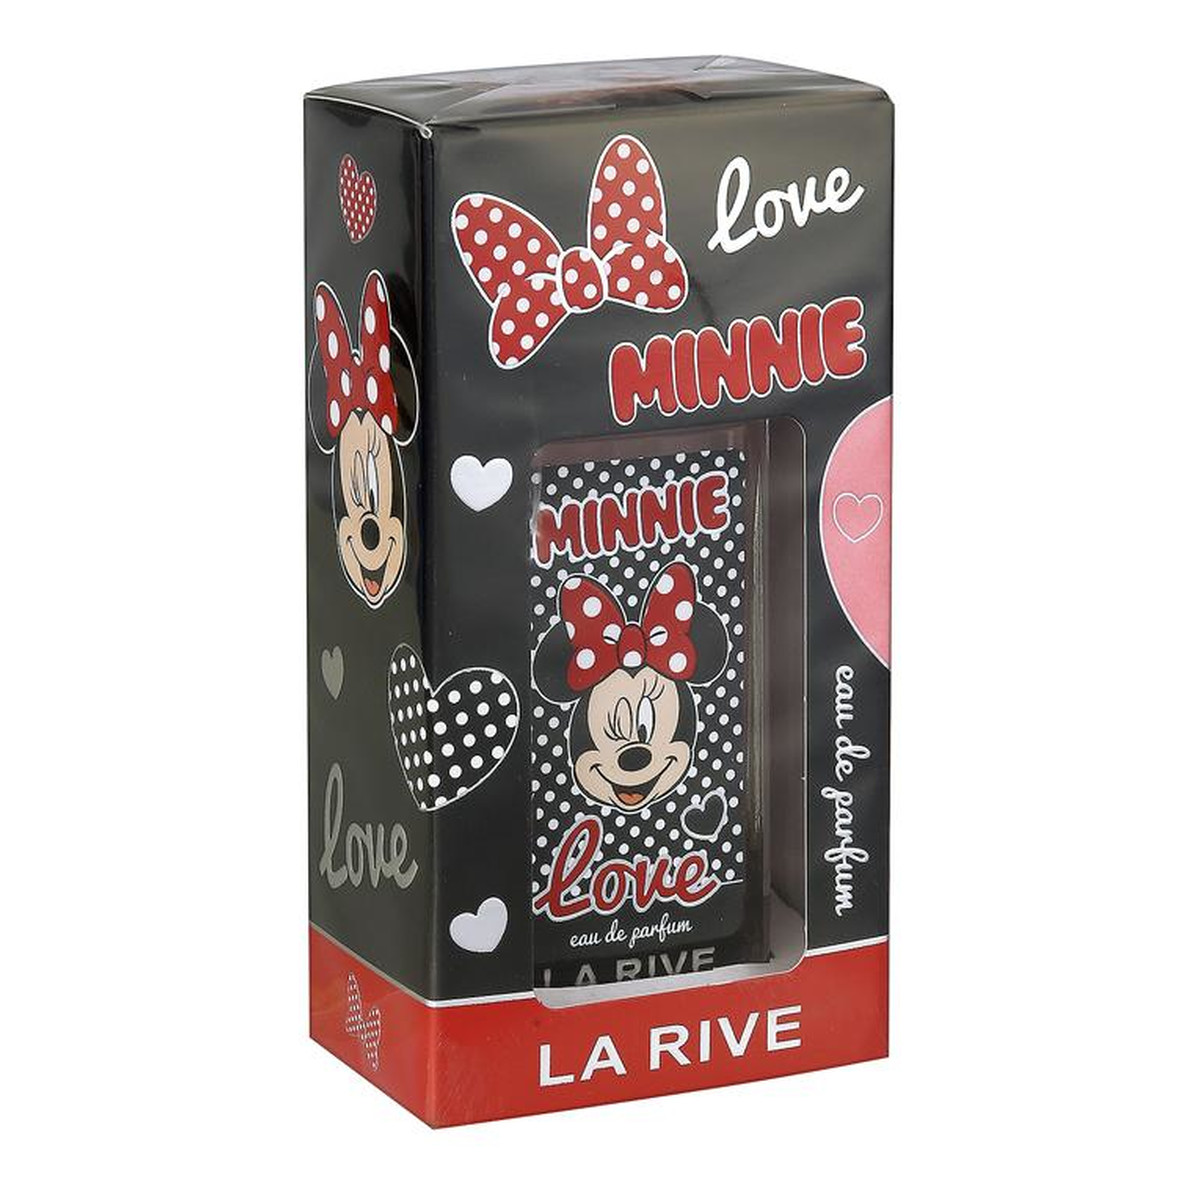 La Rive Disney Love Minnie Woda perfumowana 50ml